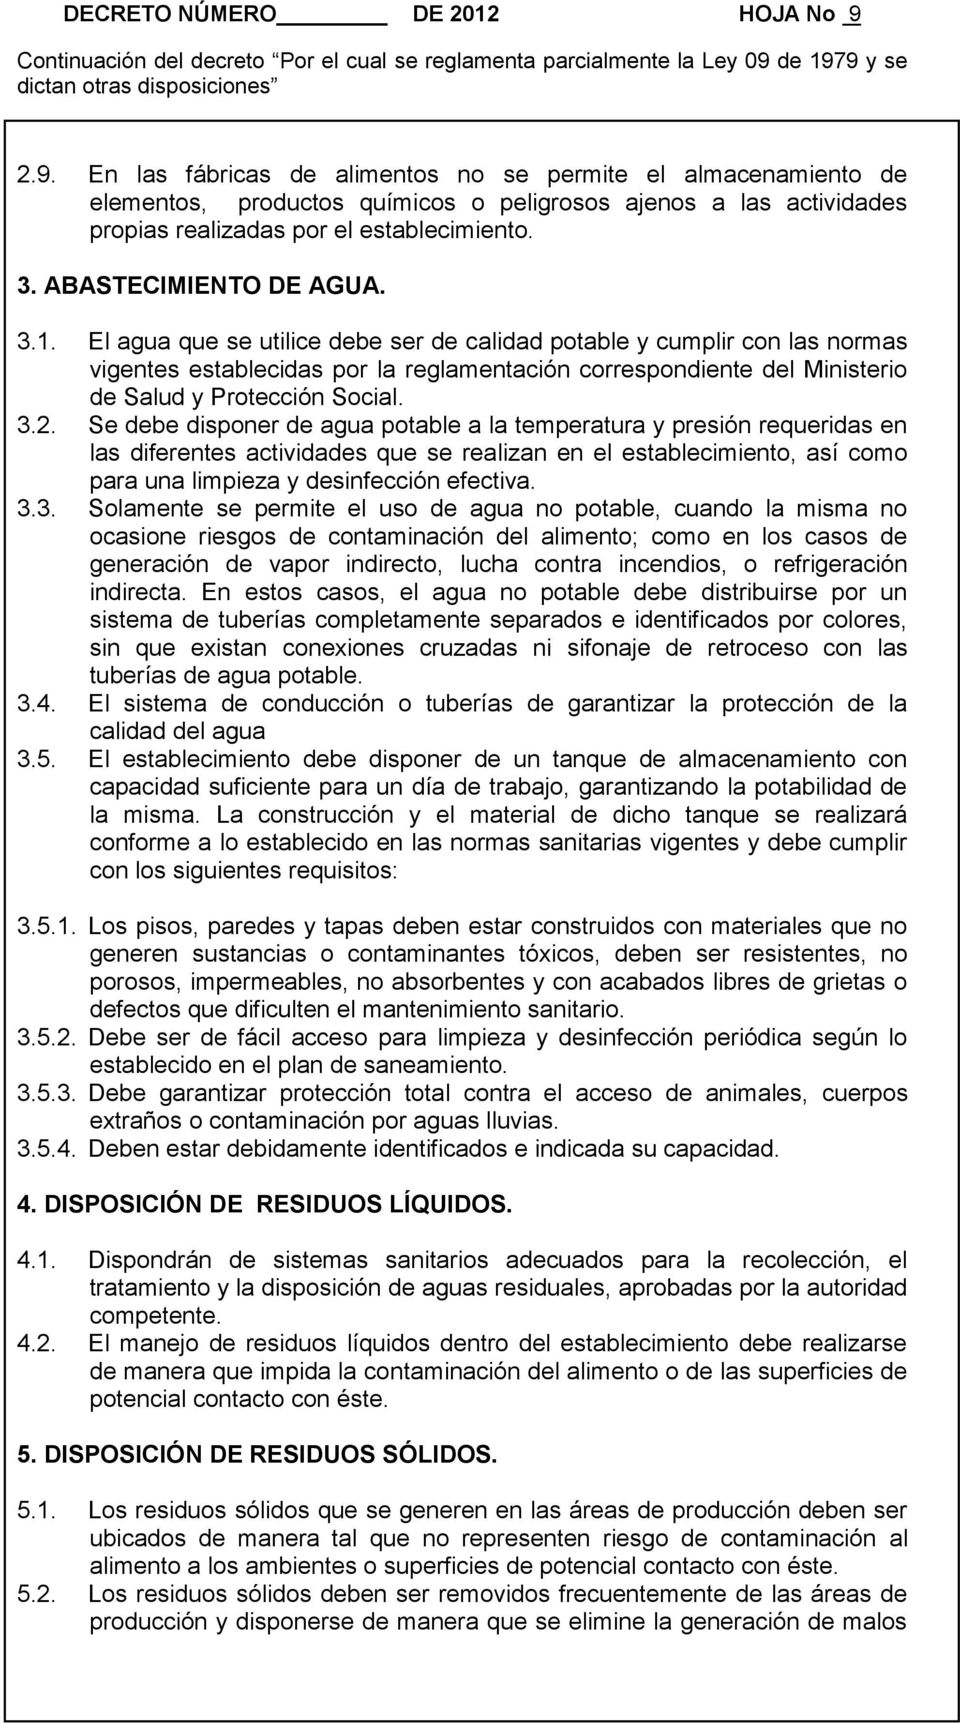 ABASTECIMIENTO DE AGUA. 3.1.